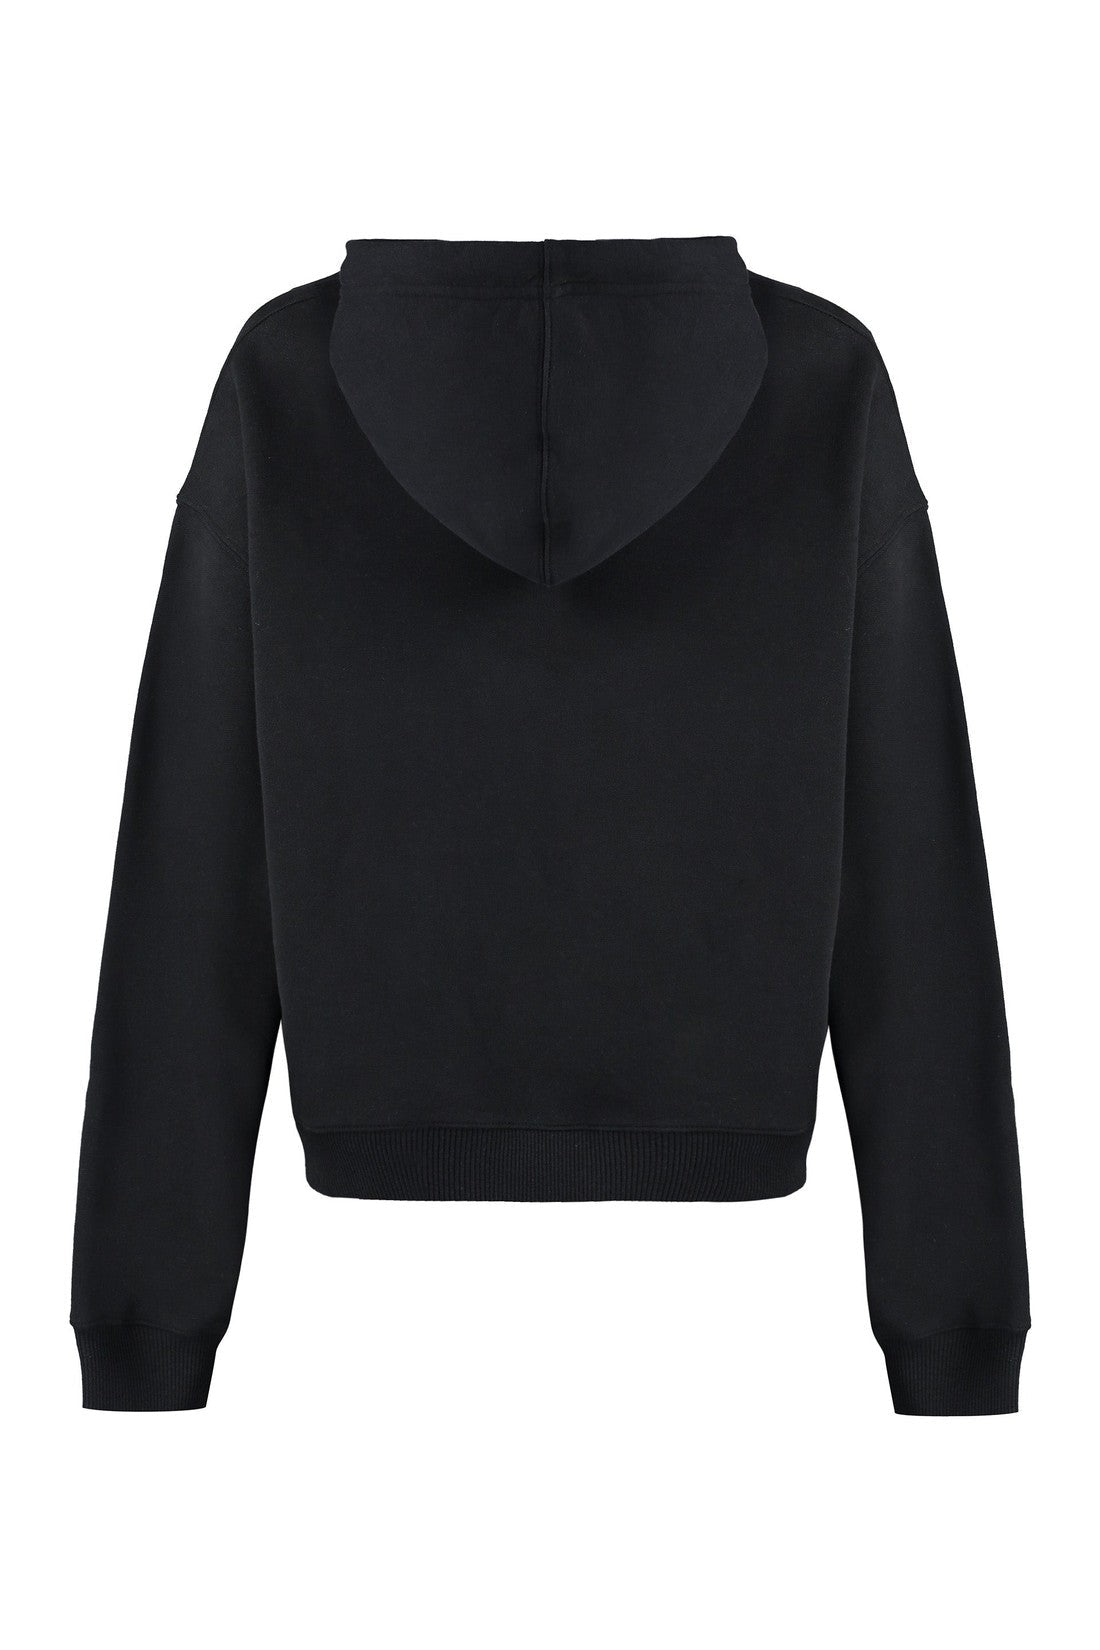 Chloé-OUTLET-SALE-Printed hoodie-ARCHIVIST